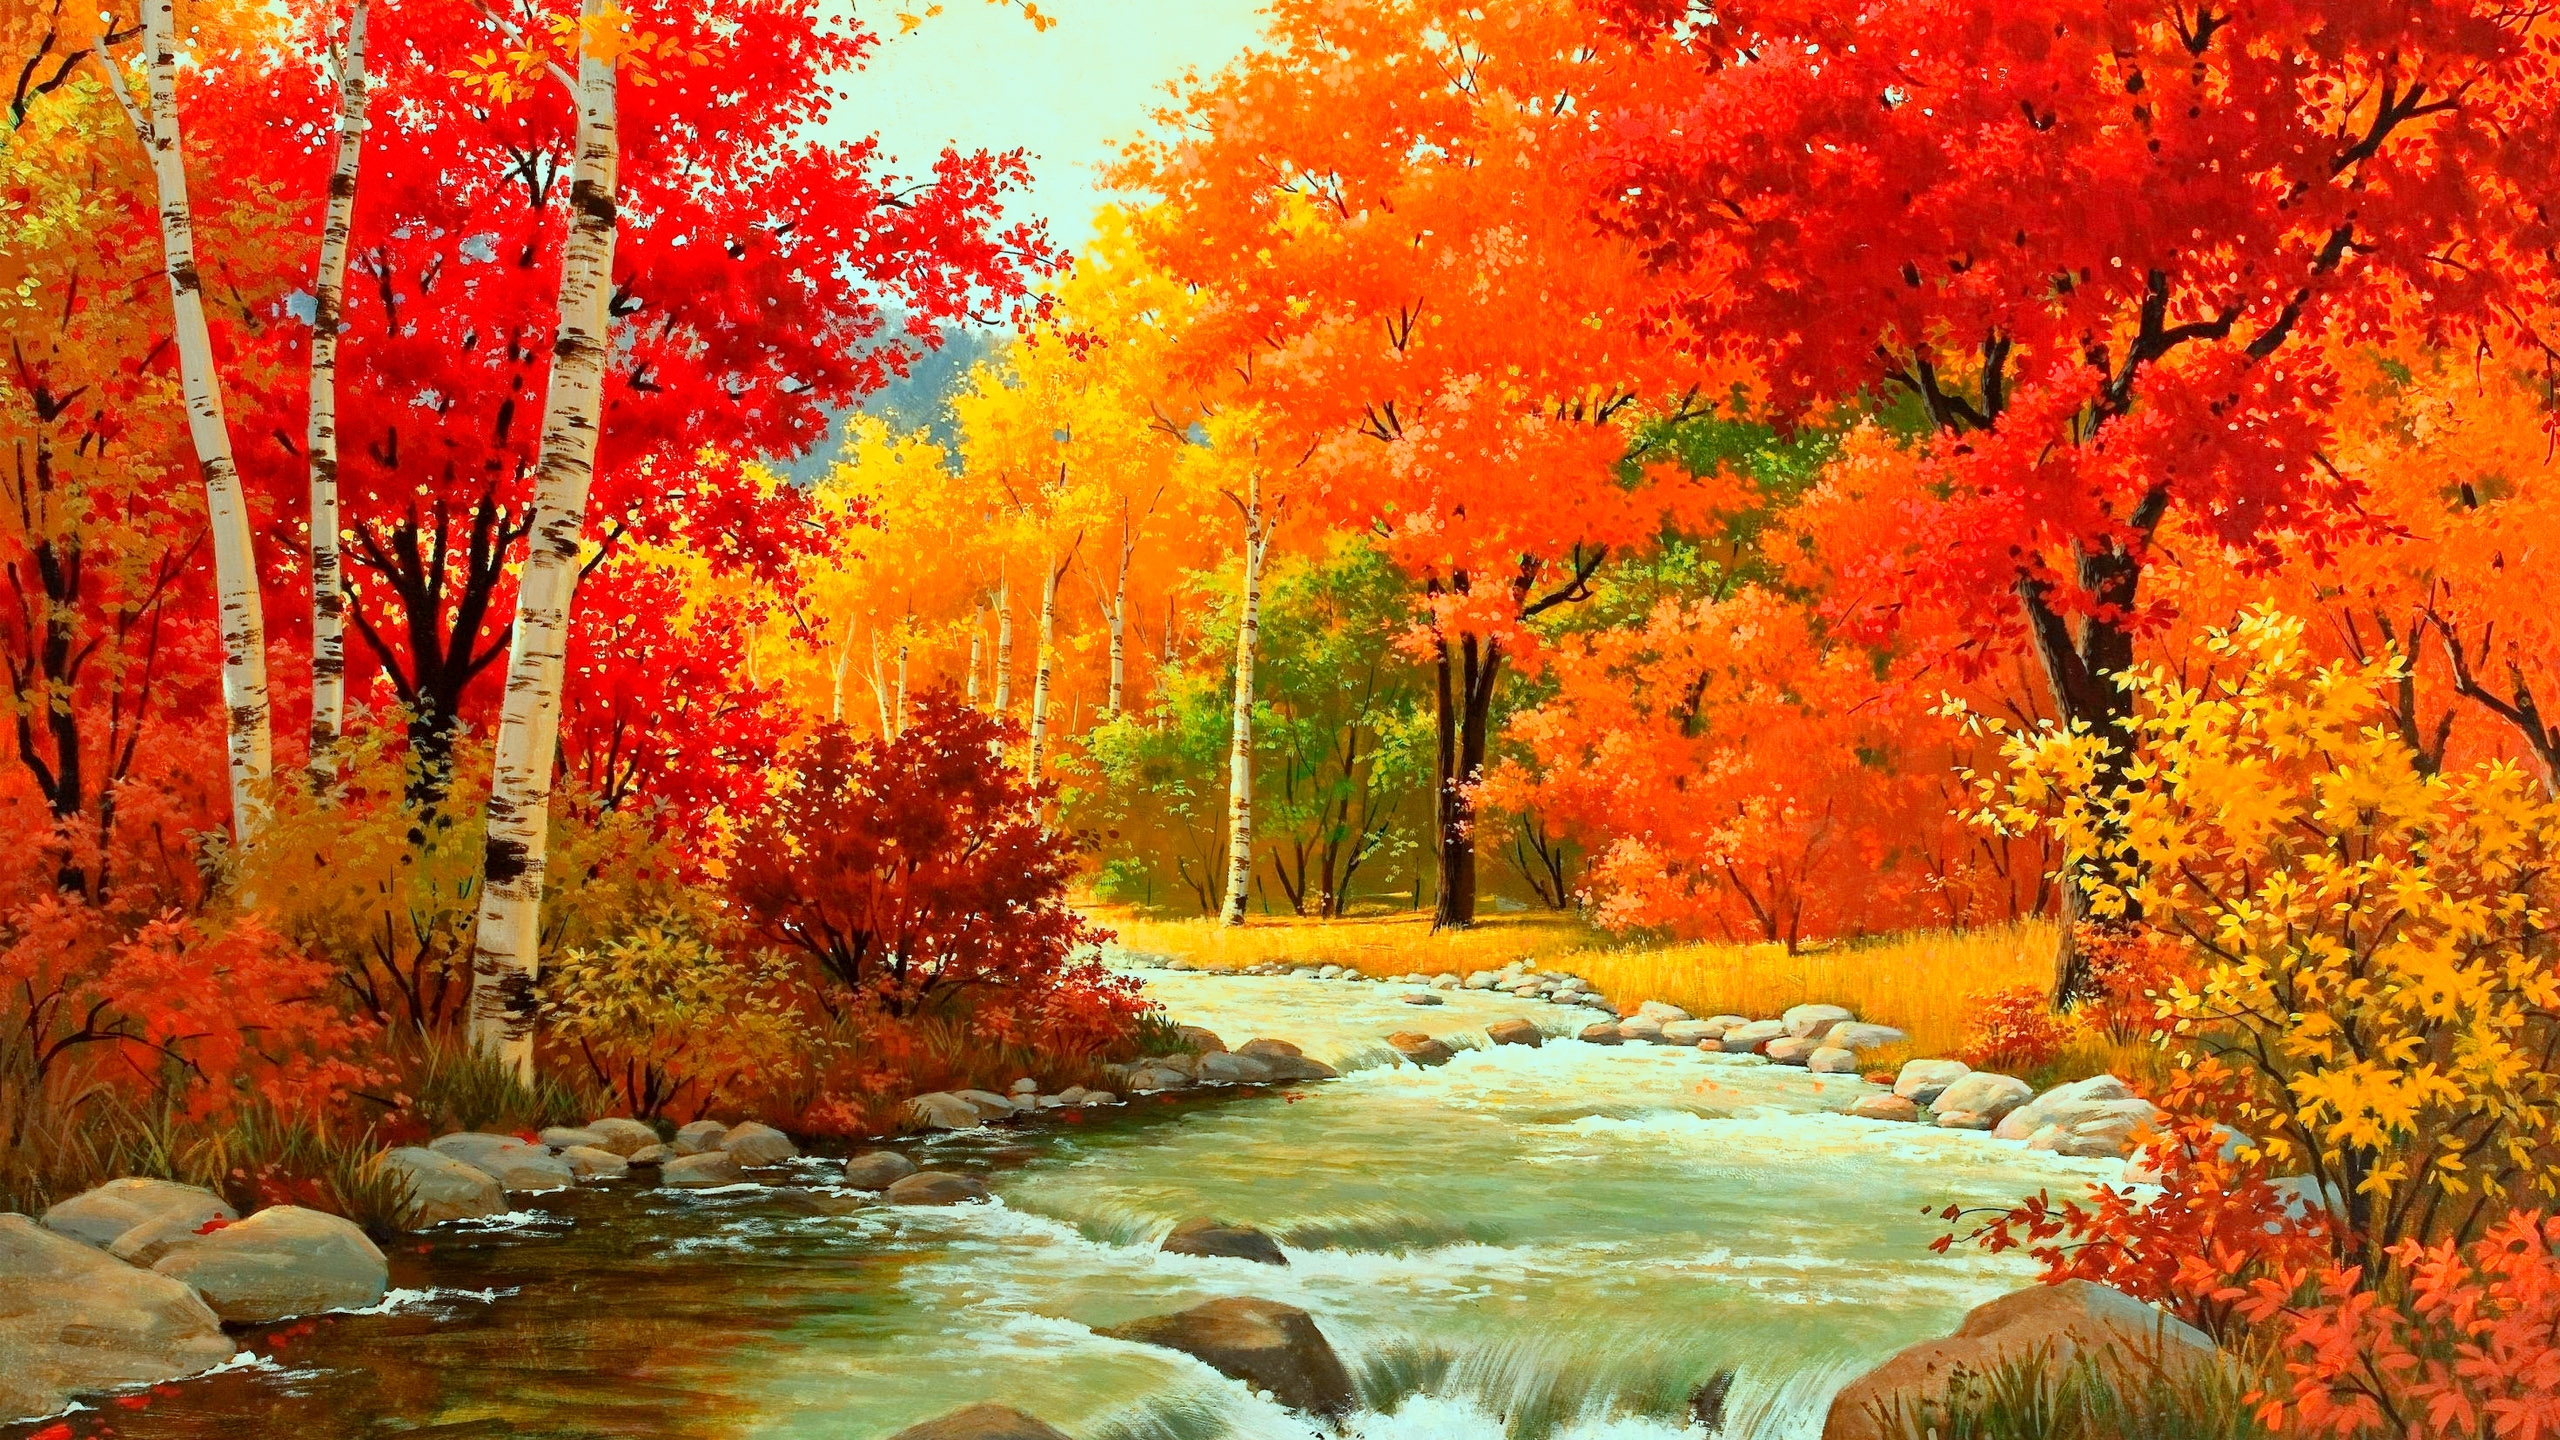 Beautiful Nature Wallpaper - best nature wallpaper for laptop desktop and mobile - mrlaboratory.info